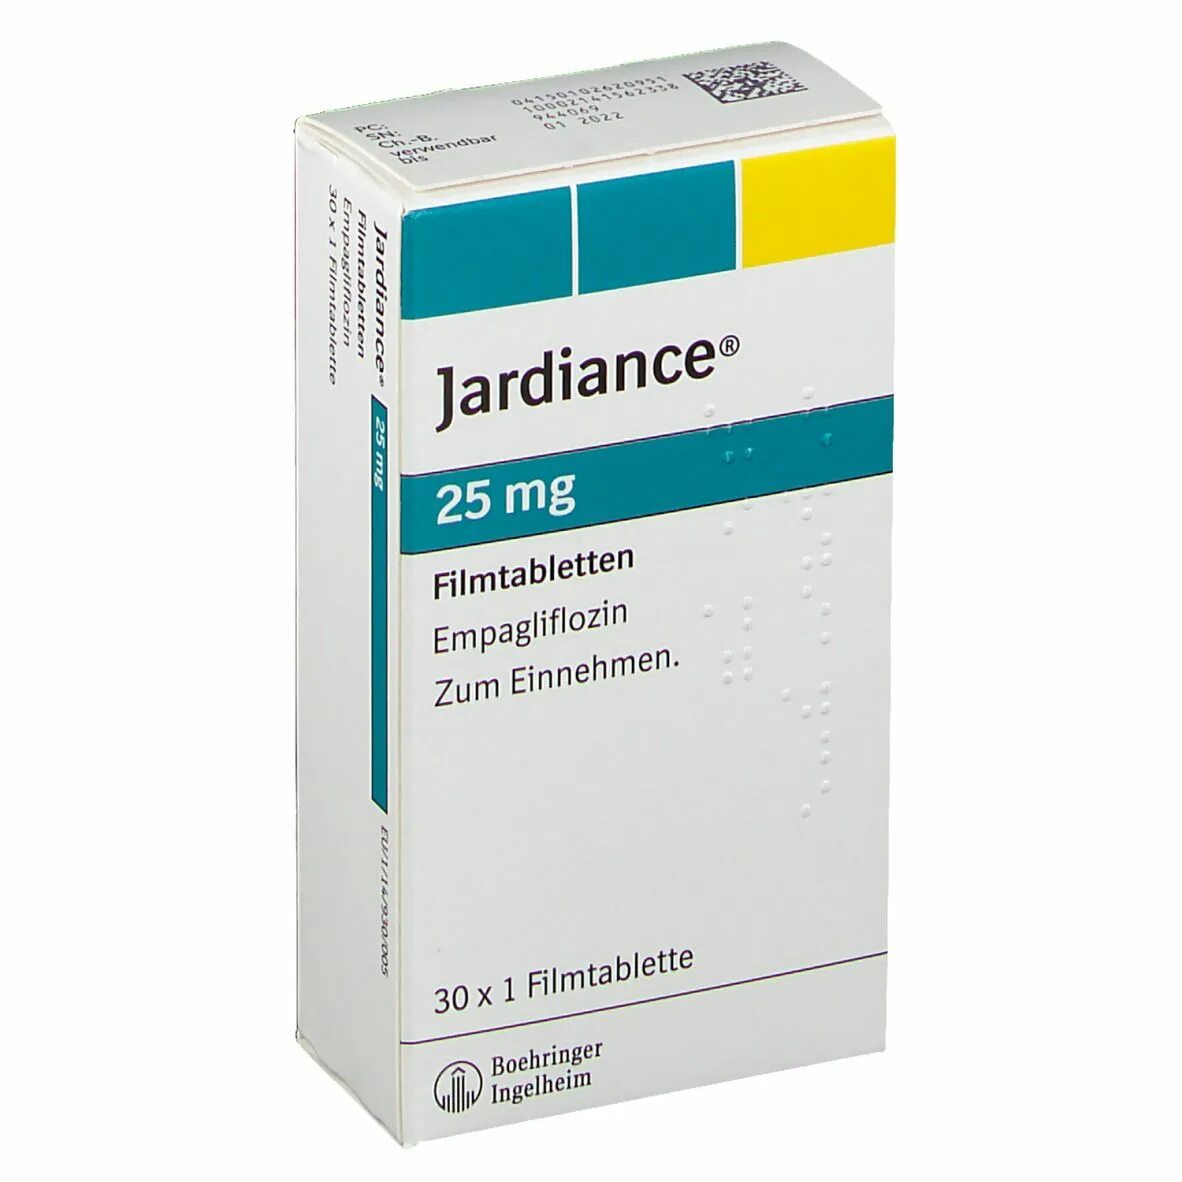 Джардинс таб 25мг. Таблетки Джардинс 25 мг. Джорднис 25 мг таблетки. Джардинс 10 мг.